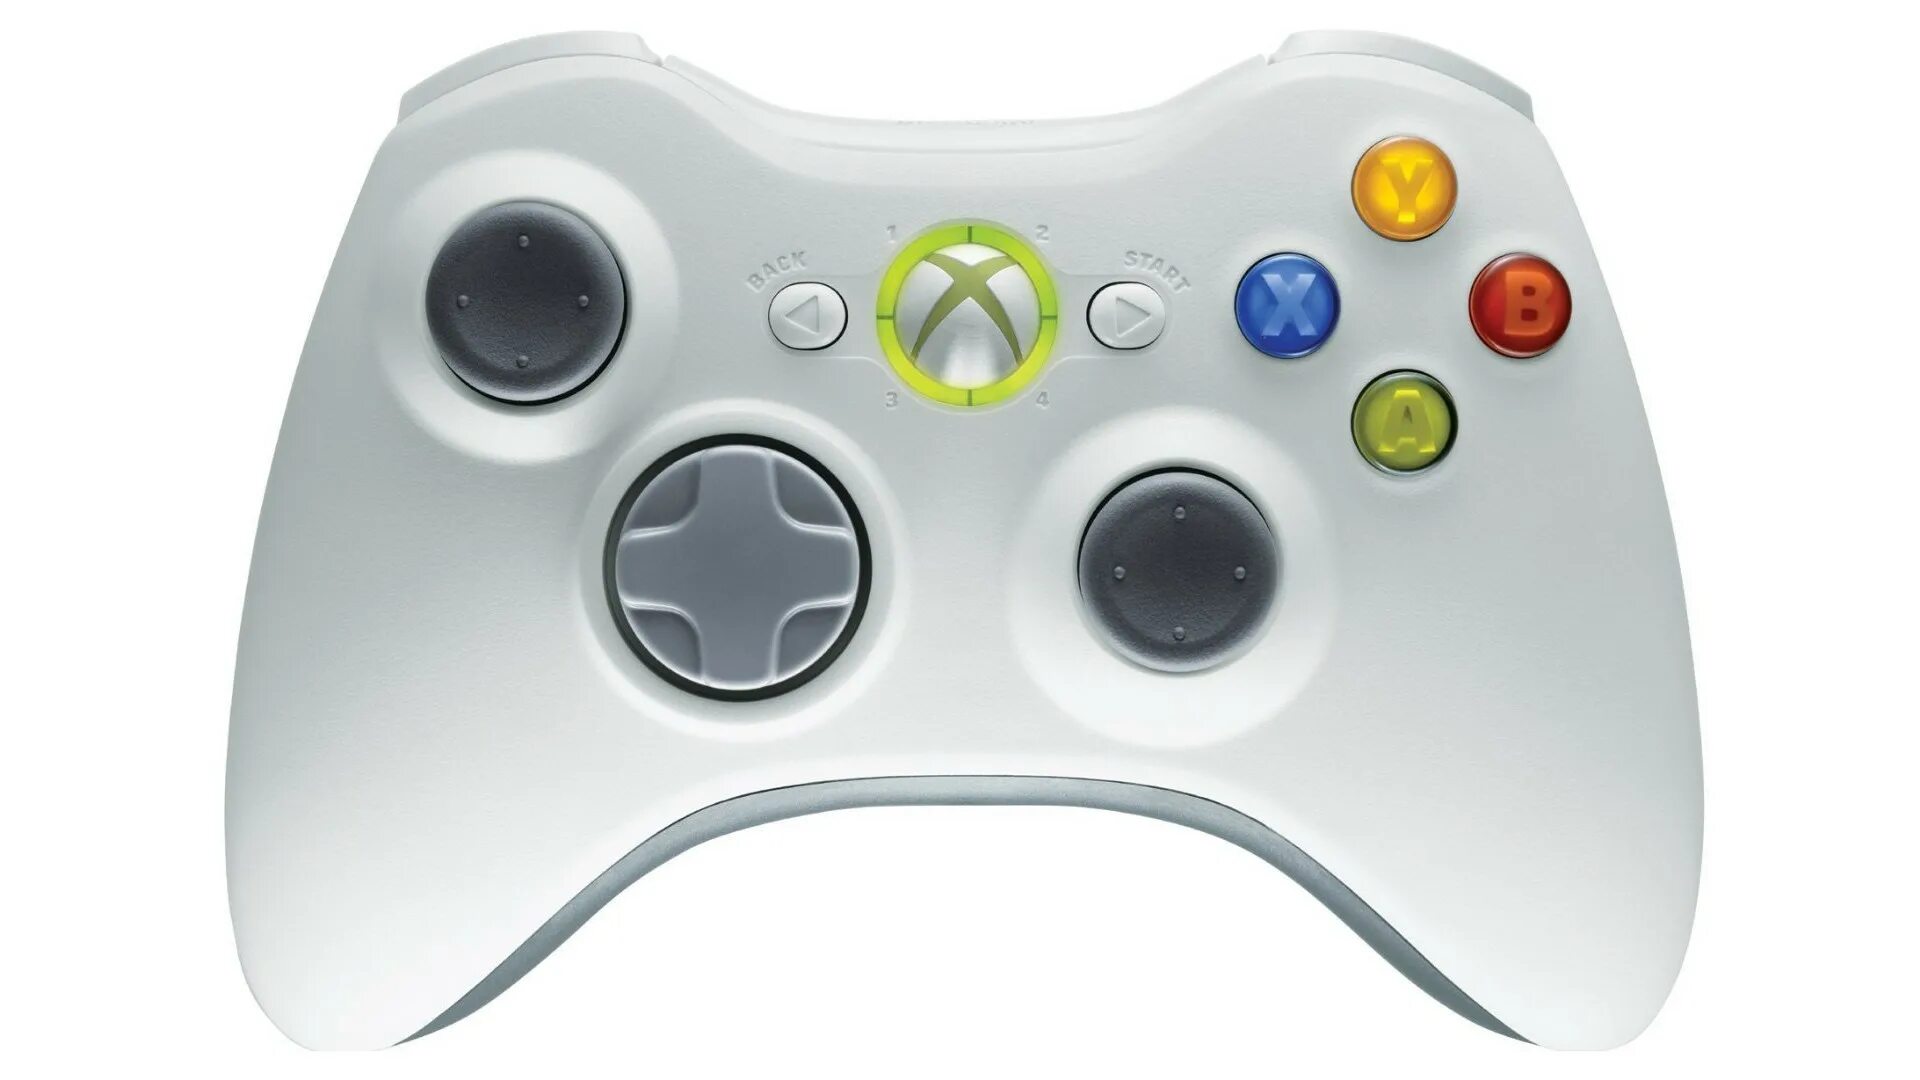 Xbox 360 Controller. Геймпад Xbox 360 bmp. Геймпад Xbox 360 для Xpadder. Джойстик хбокс 360 bmp.